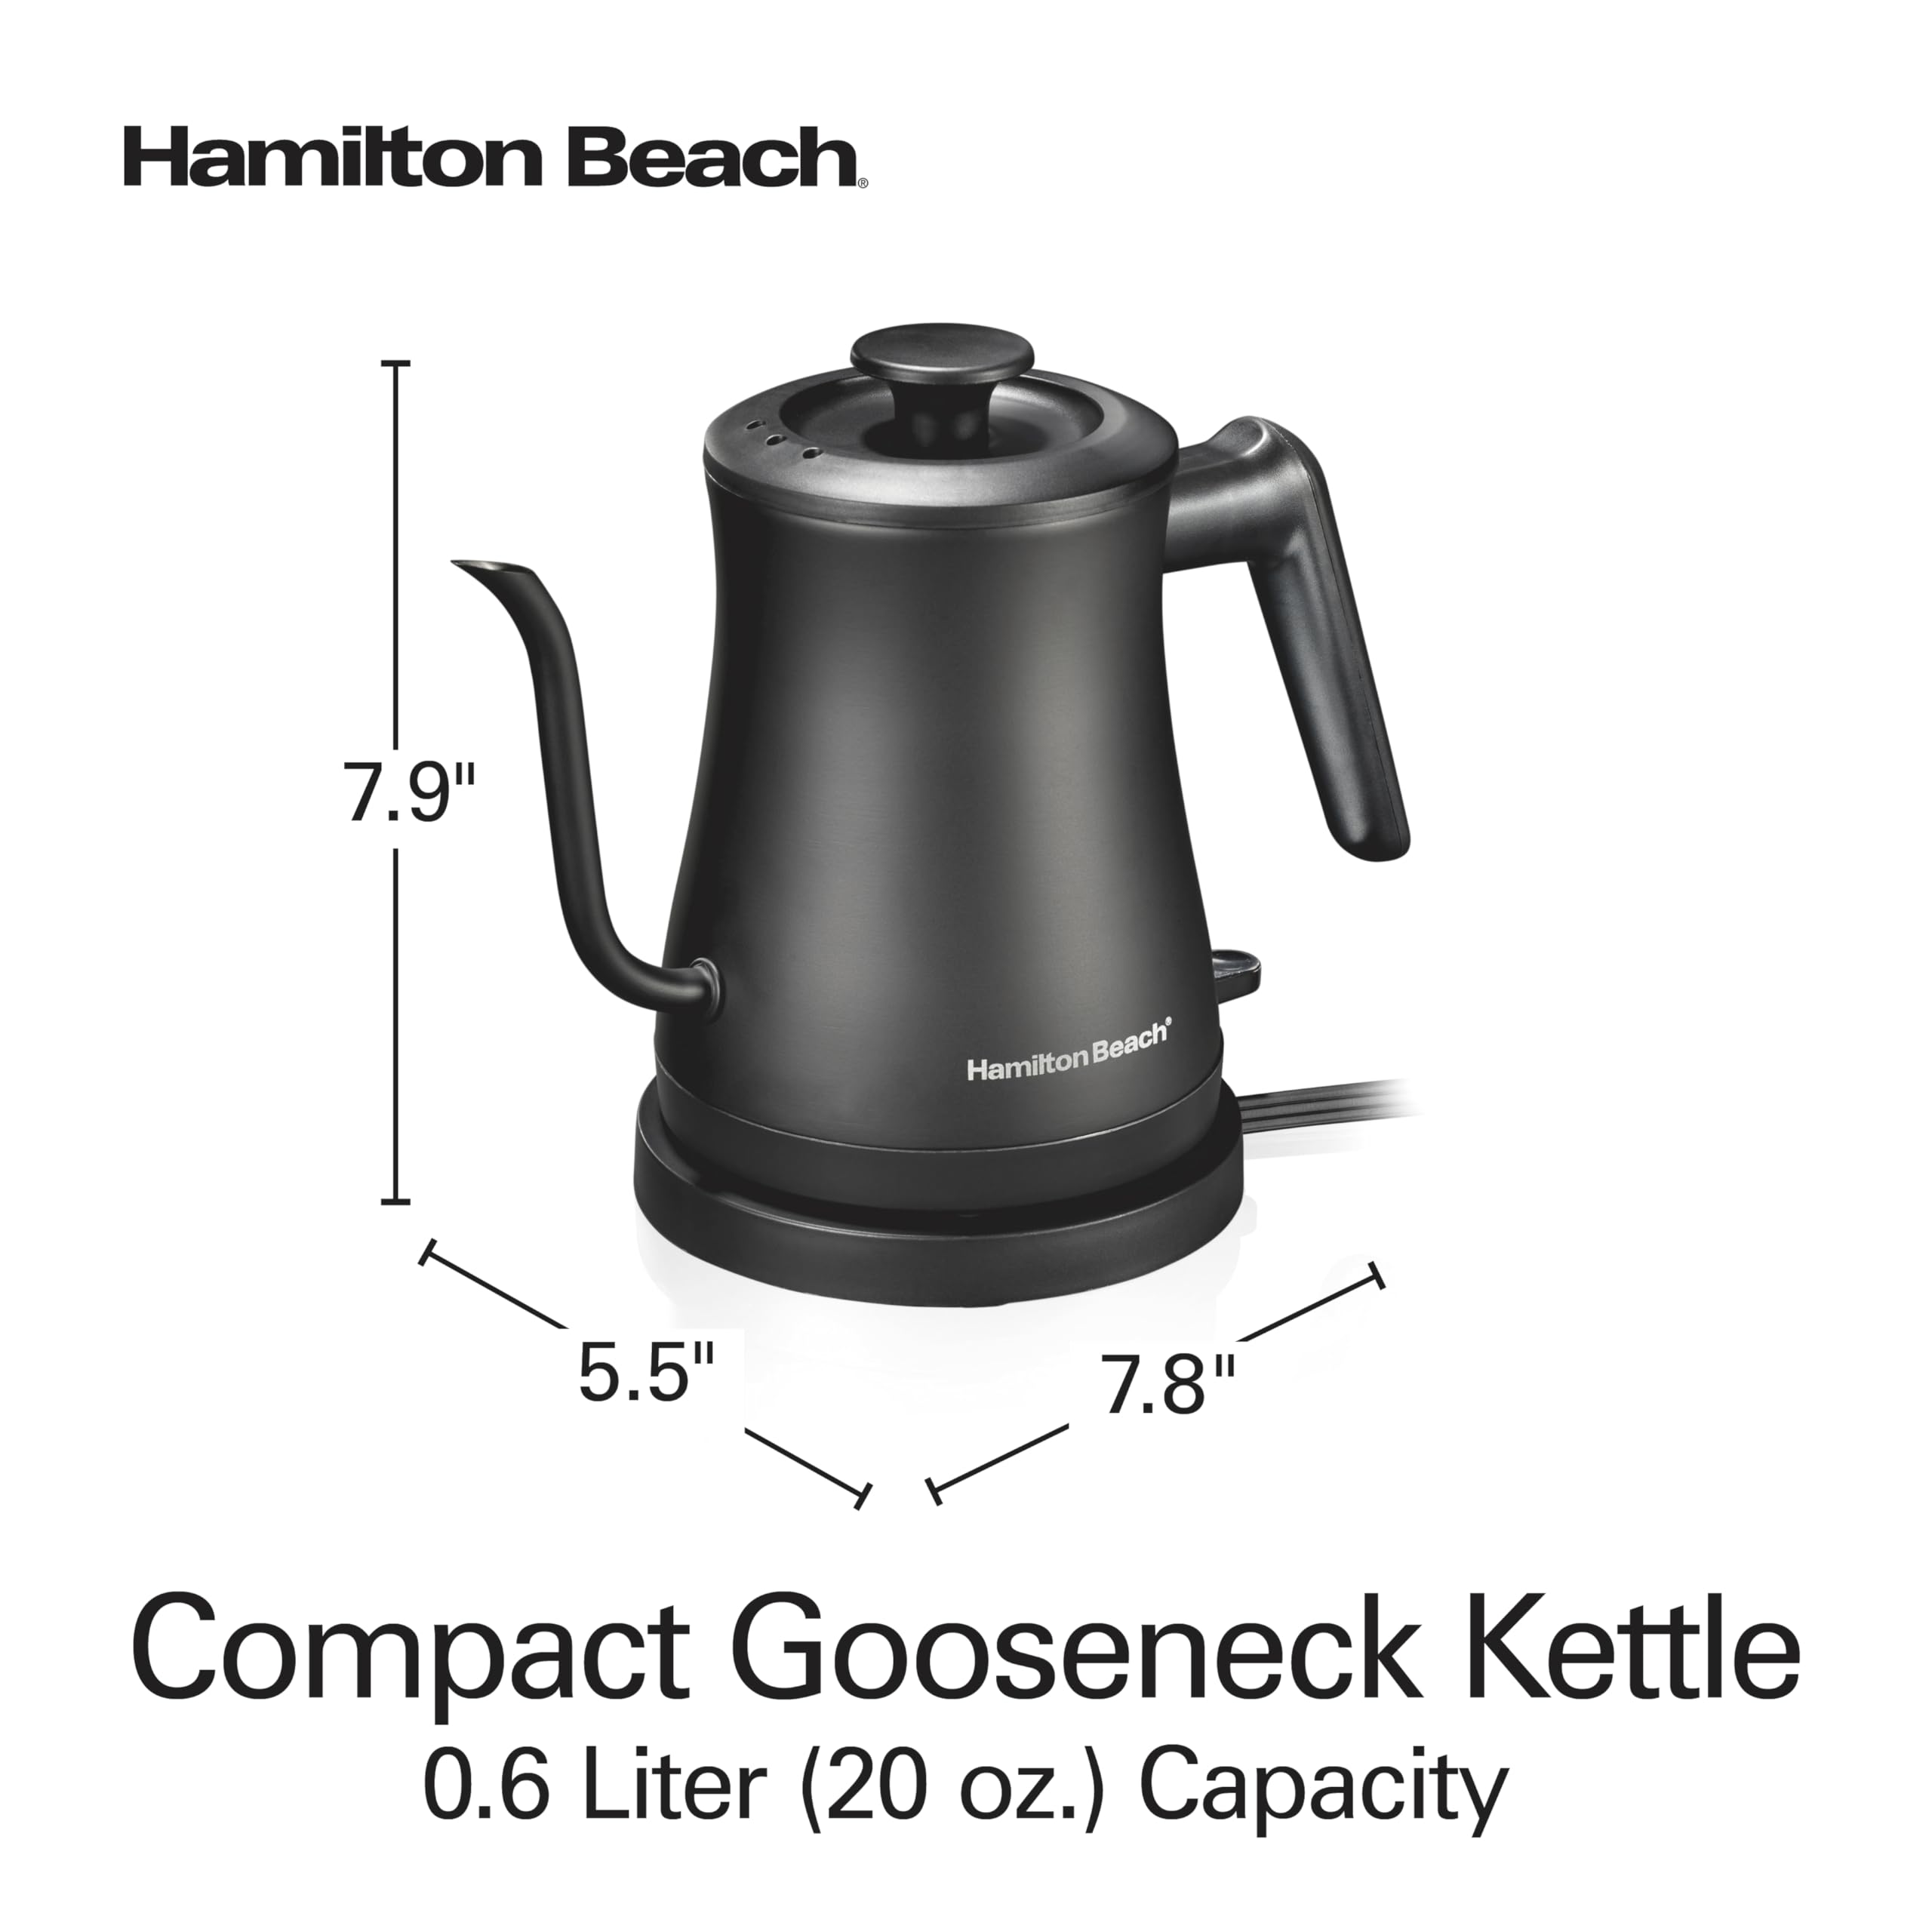 Compact Gooseneck Kettle